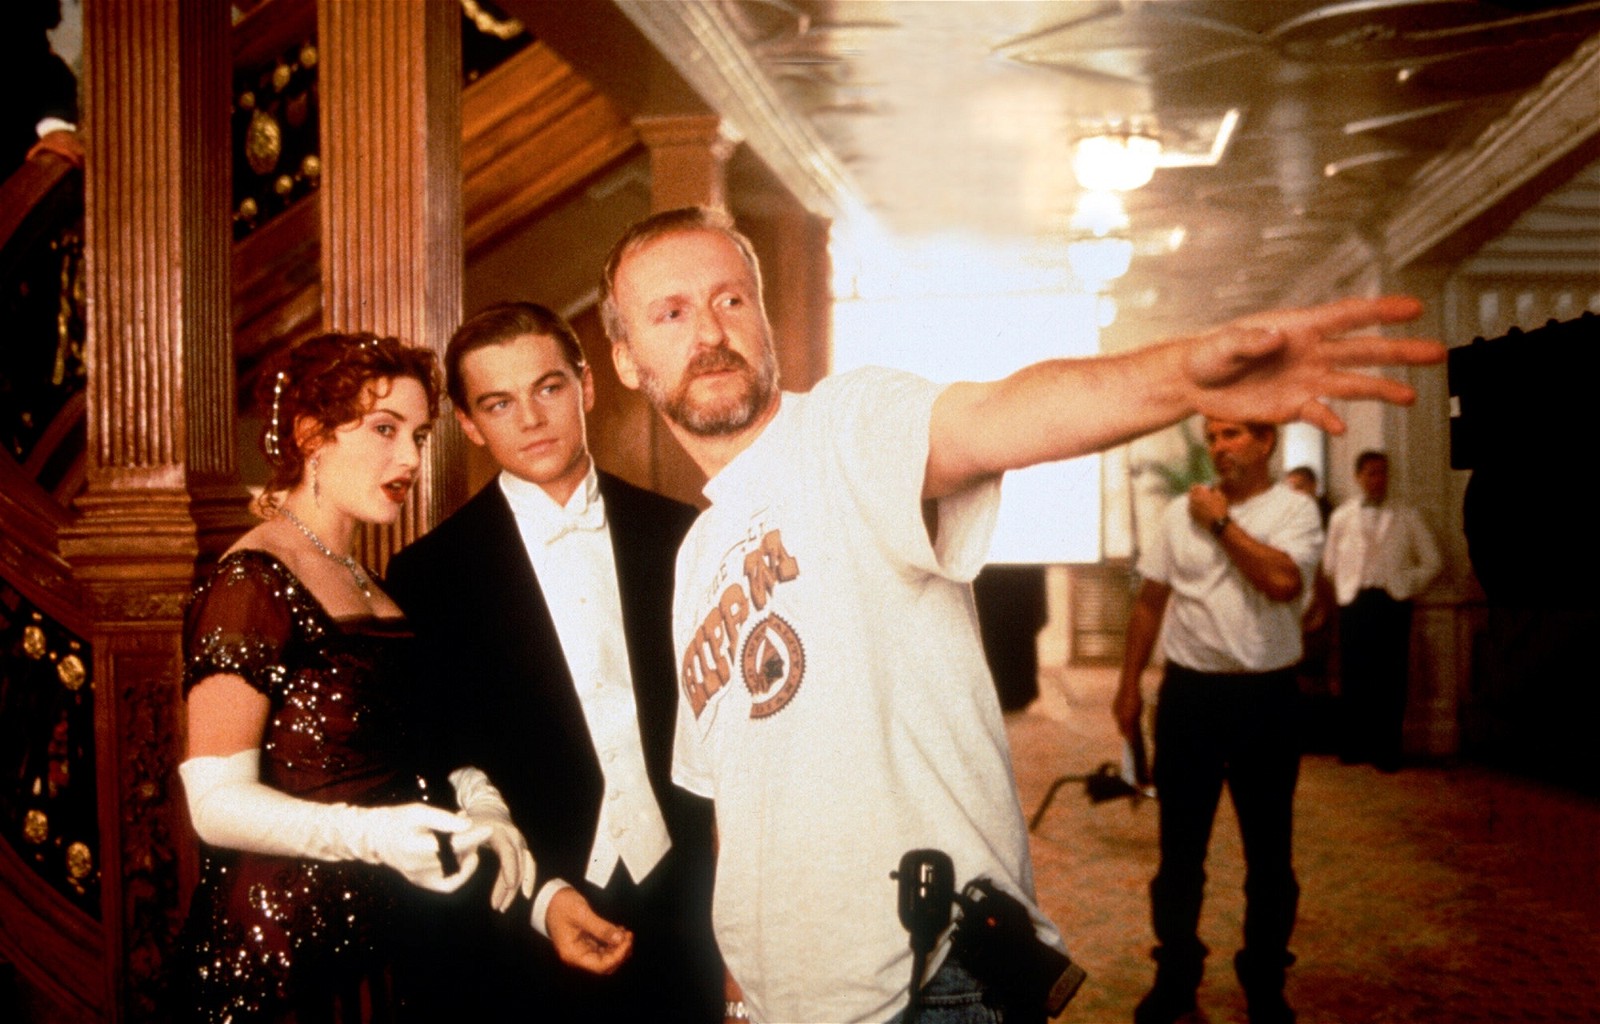 James Cameron on the sets of Titanic (1997)